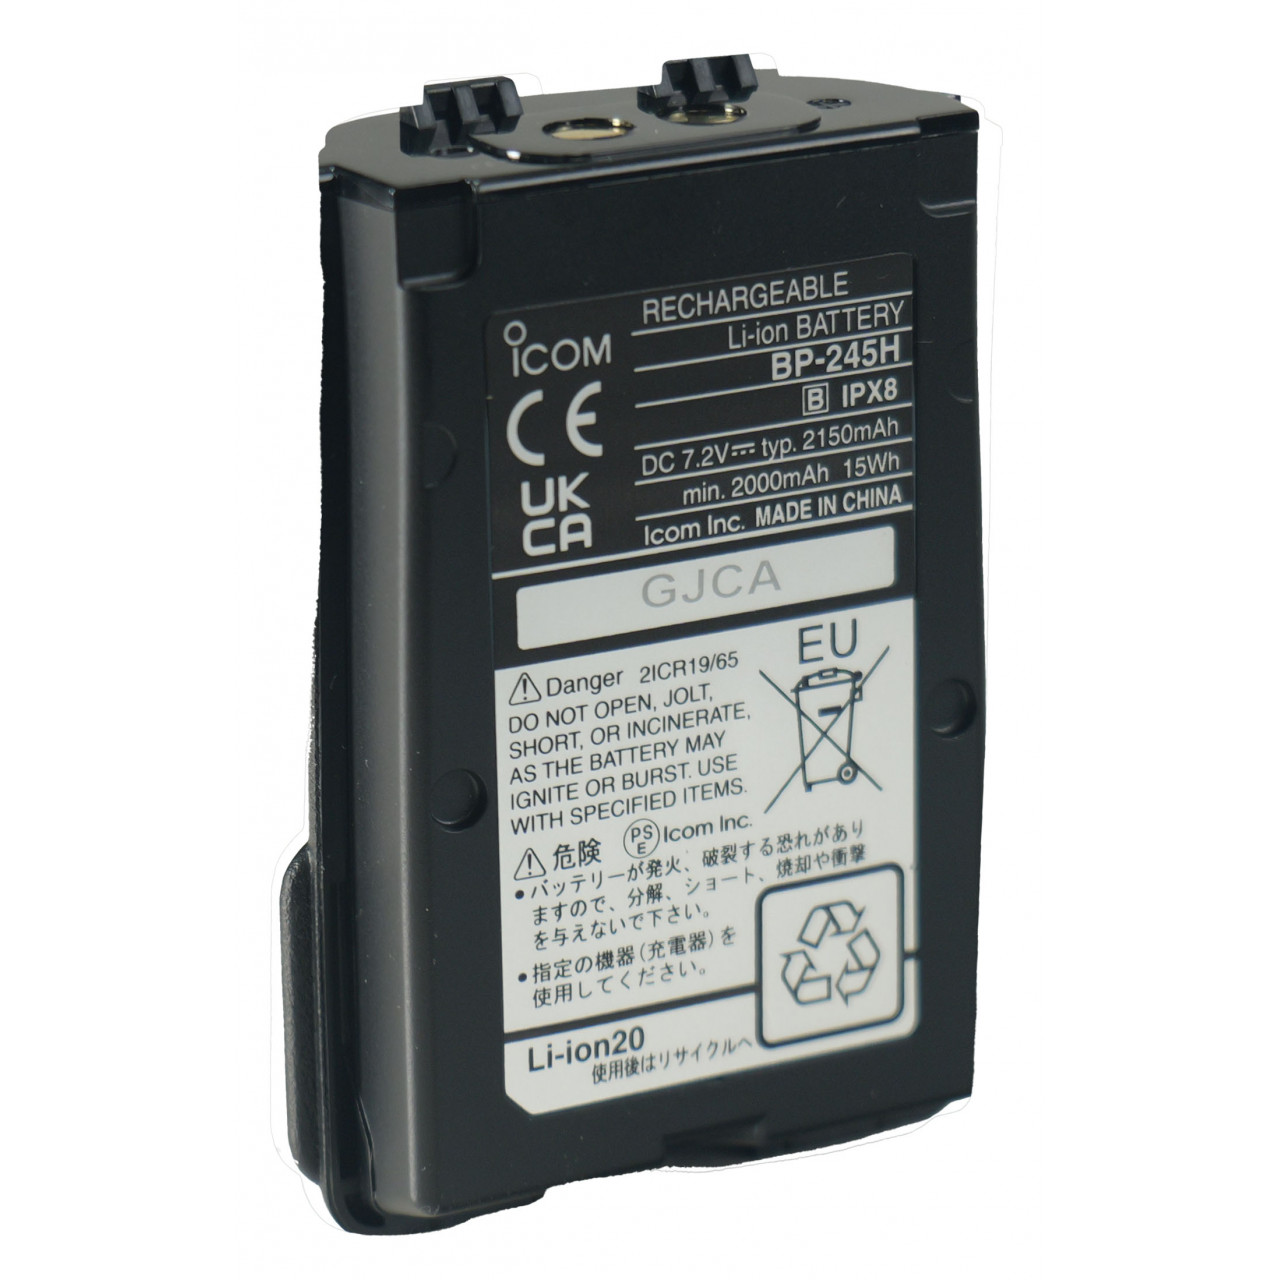 BP-245HB Batteries - ICOM